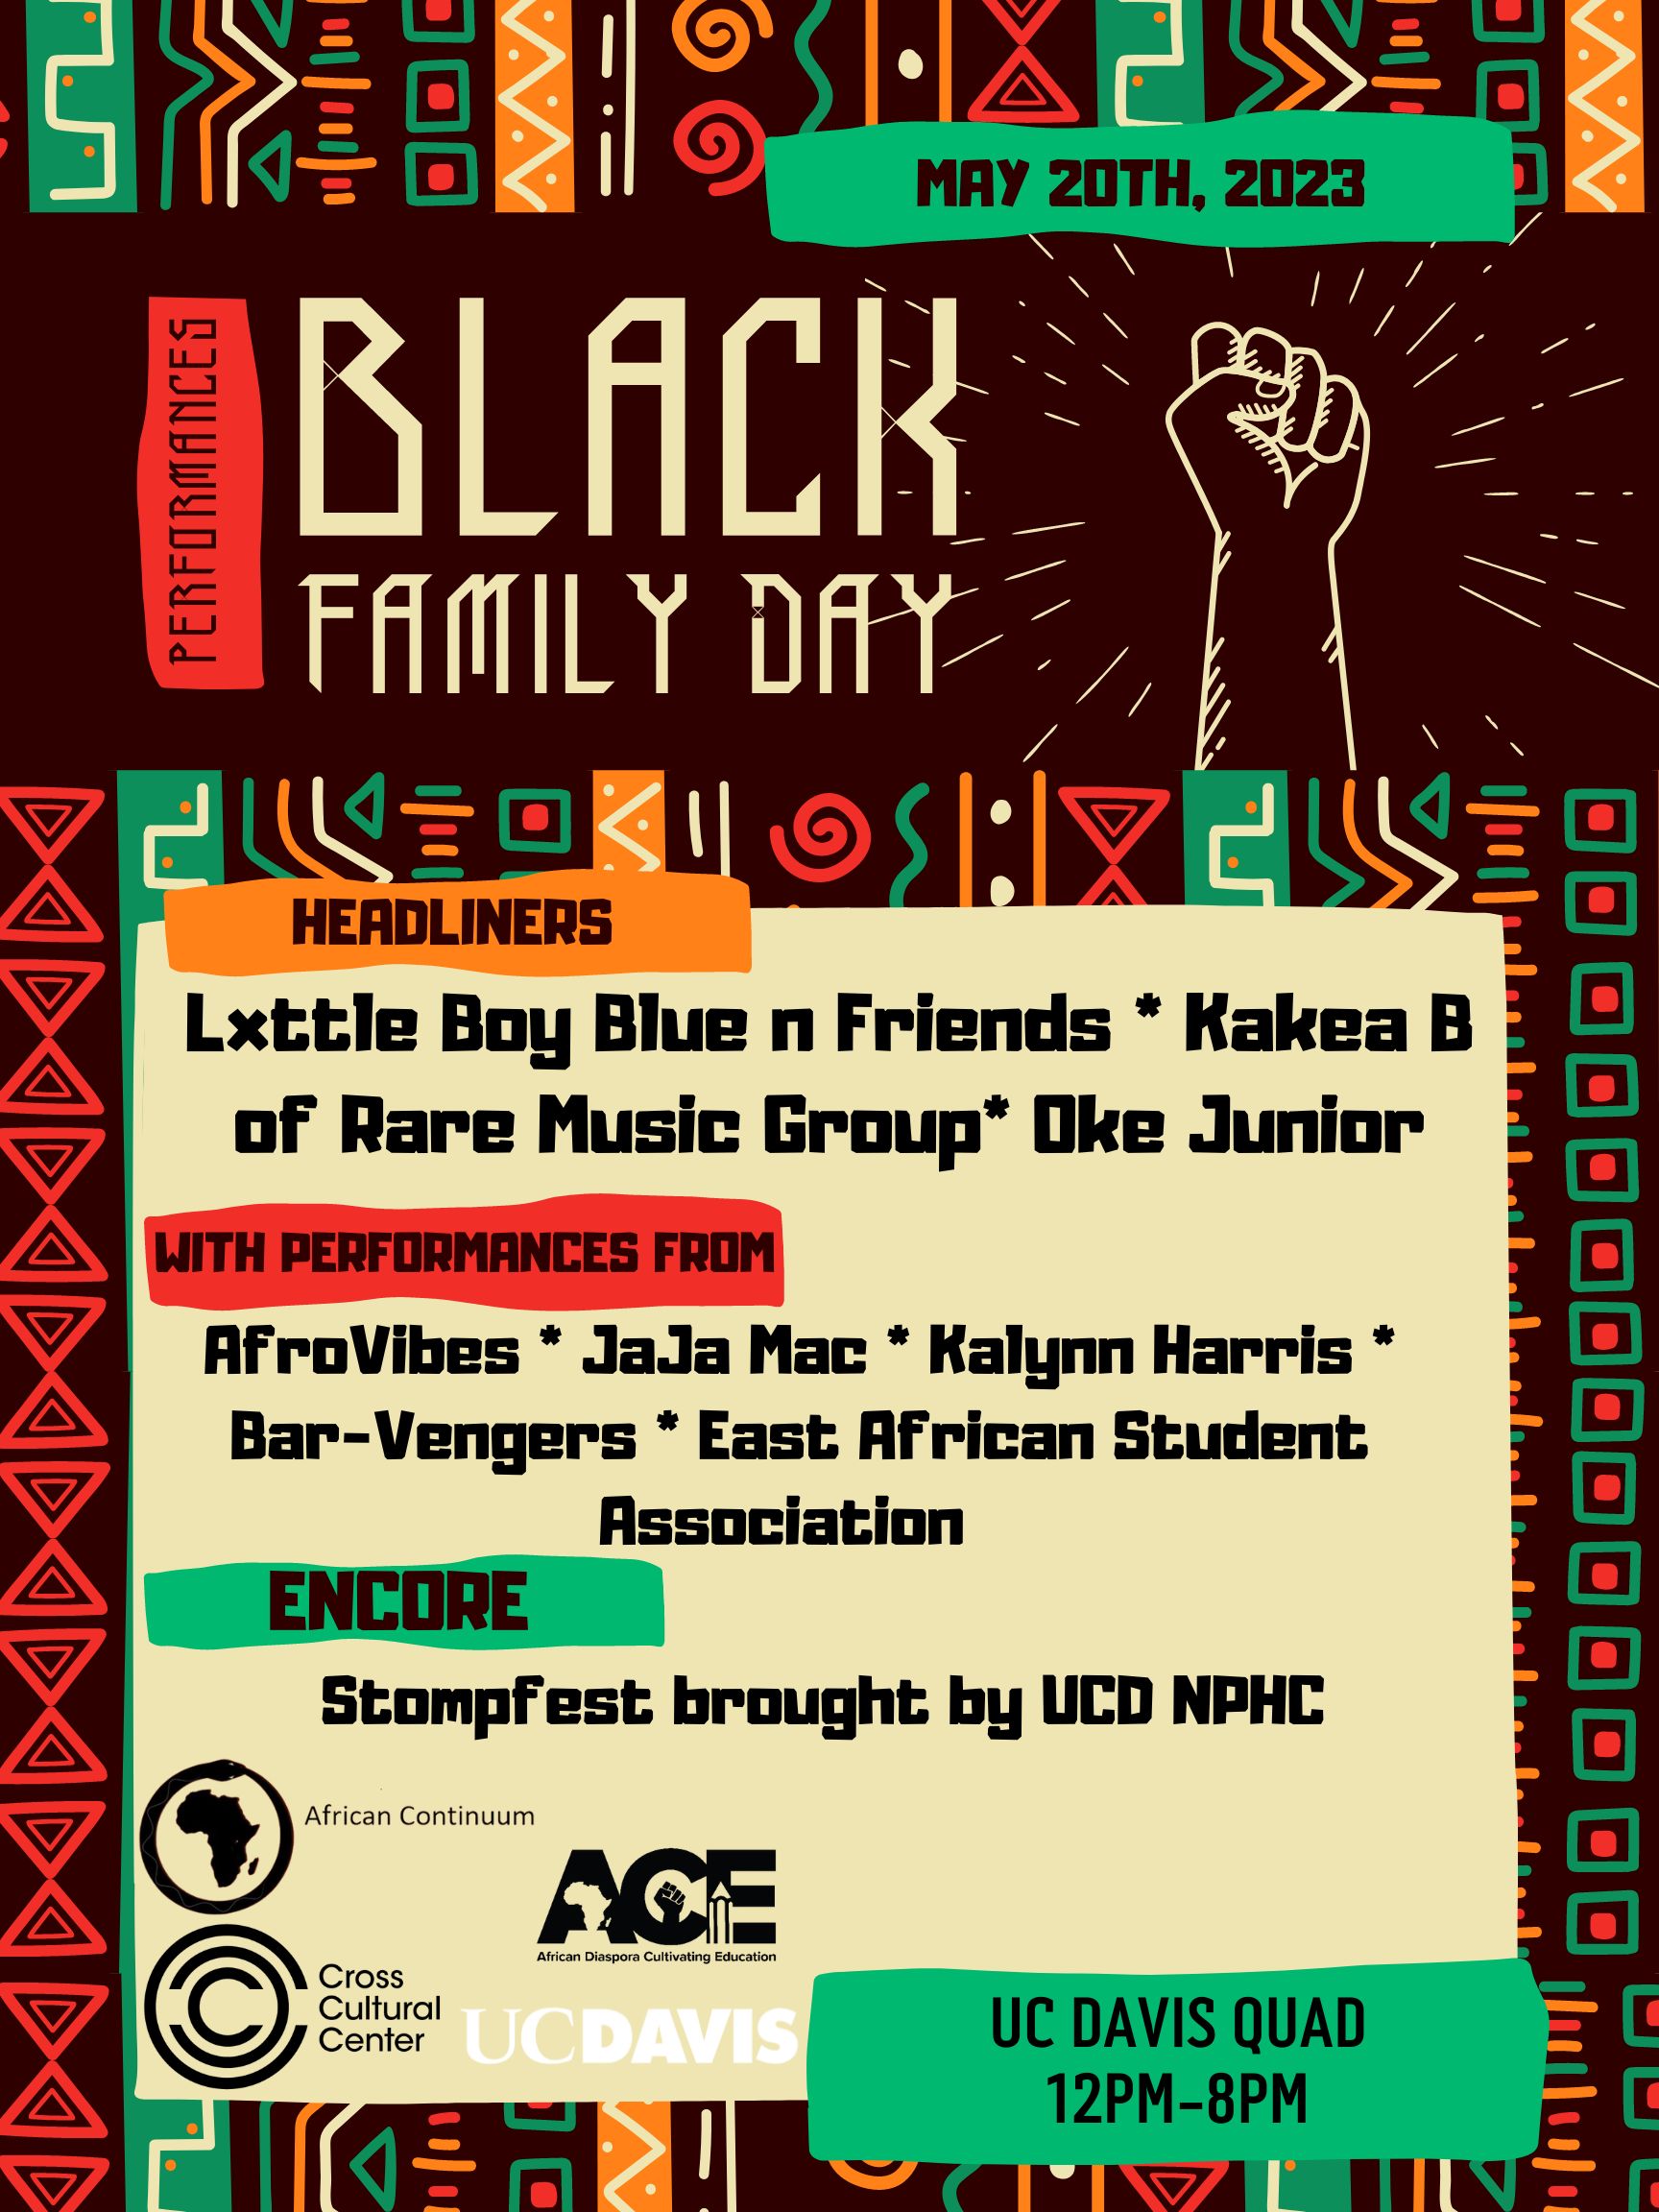 Black Family Day Performance flyer